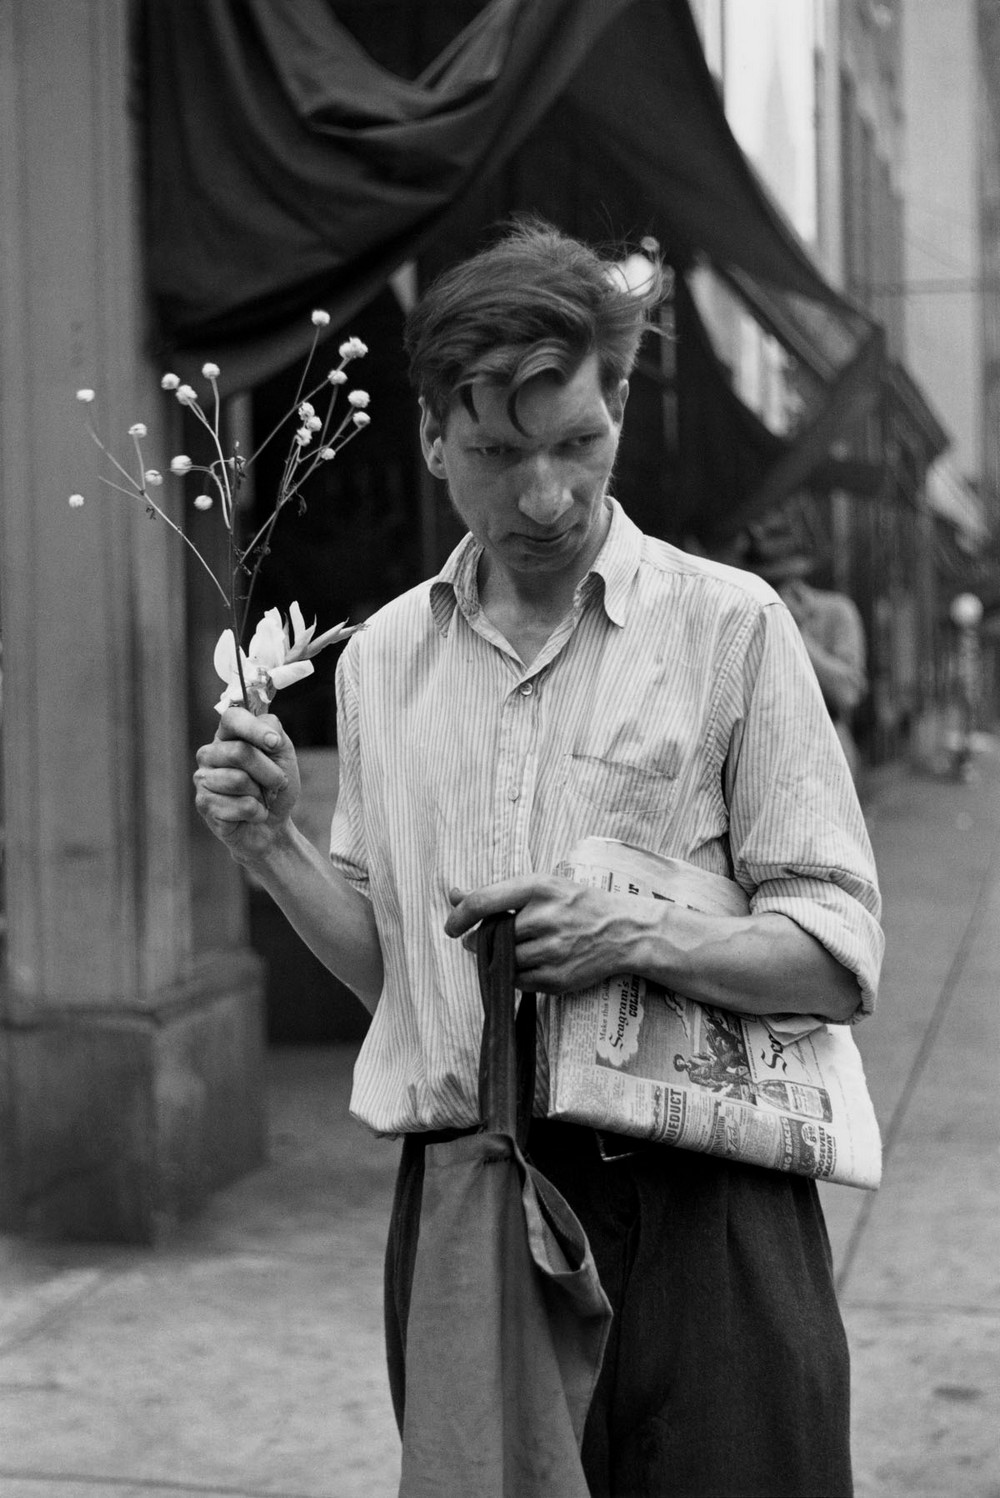 Луи Фаурер – лирик с фотокамерой на улицах Нью-Йорка  16